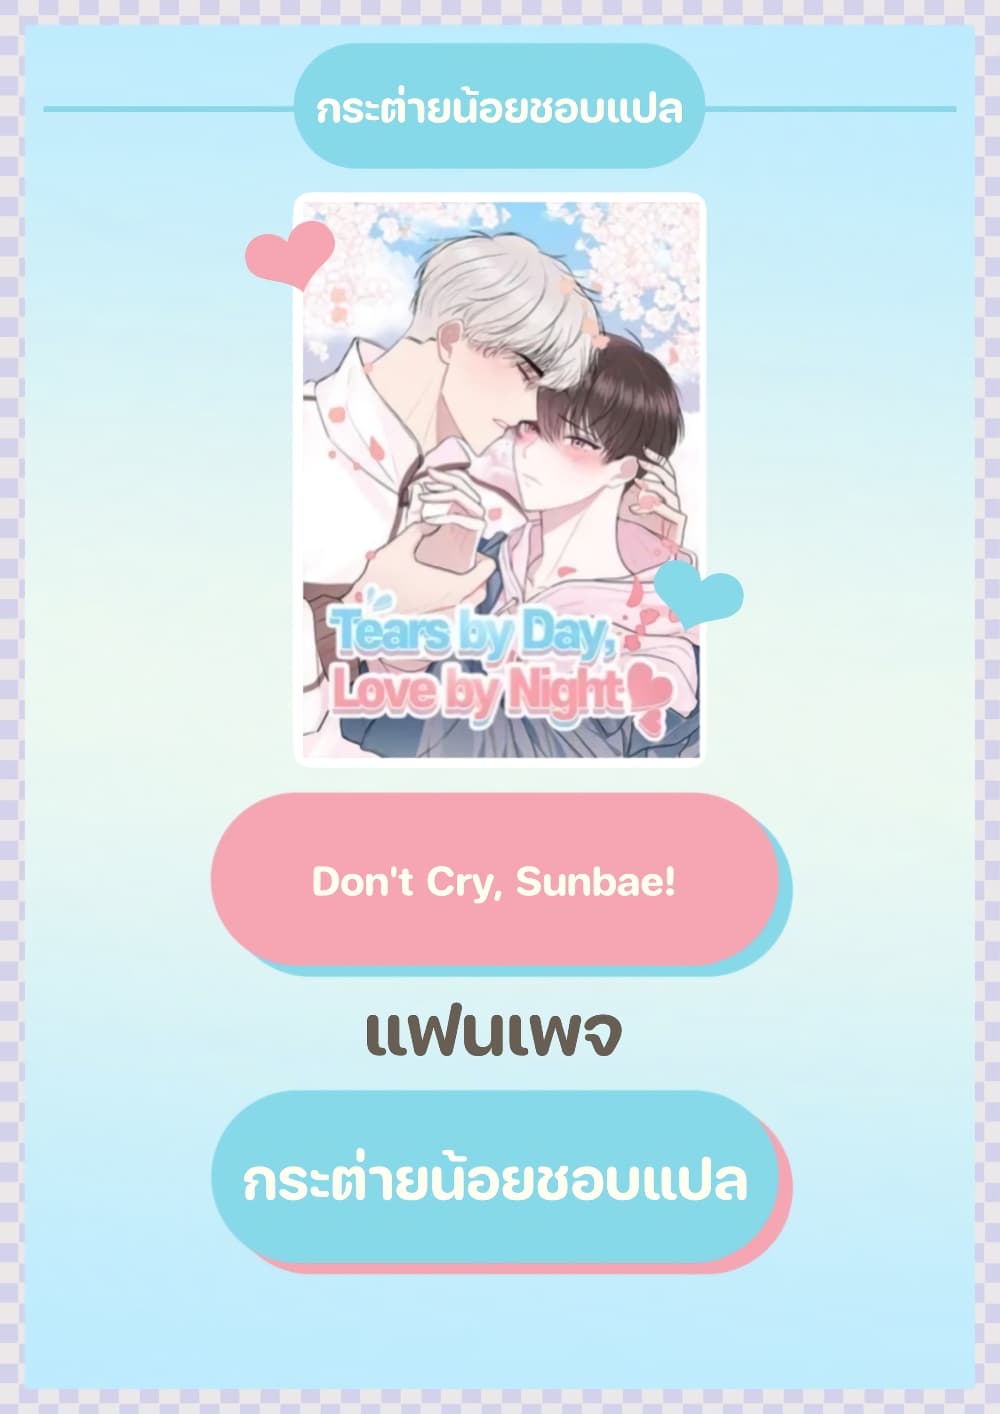 Donโ€t Cry, Sunbae! 10 (1)